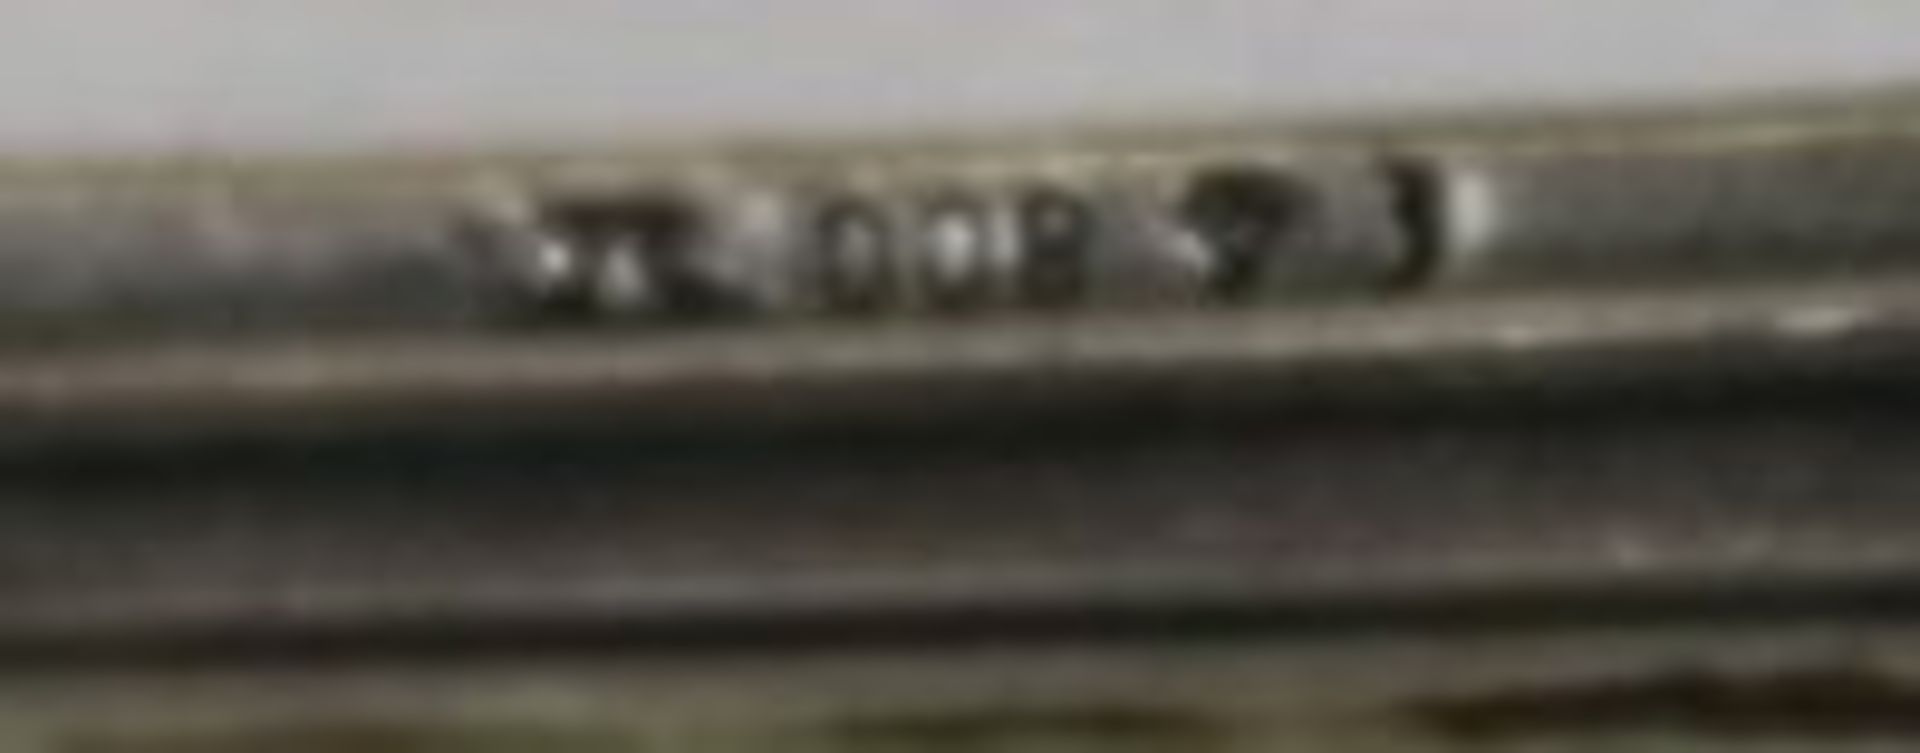 800er Silber-Esslöffel, Jugendstil, div. Gravuren "Margot" verso "B.F.1905", 64,2gr., L-21cm. - Bild 2 aus 3